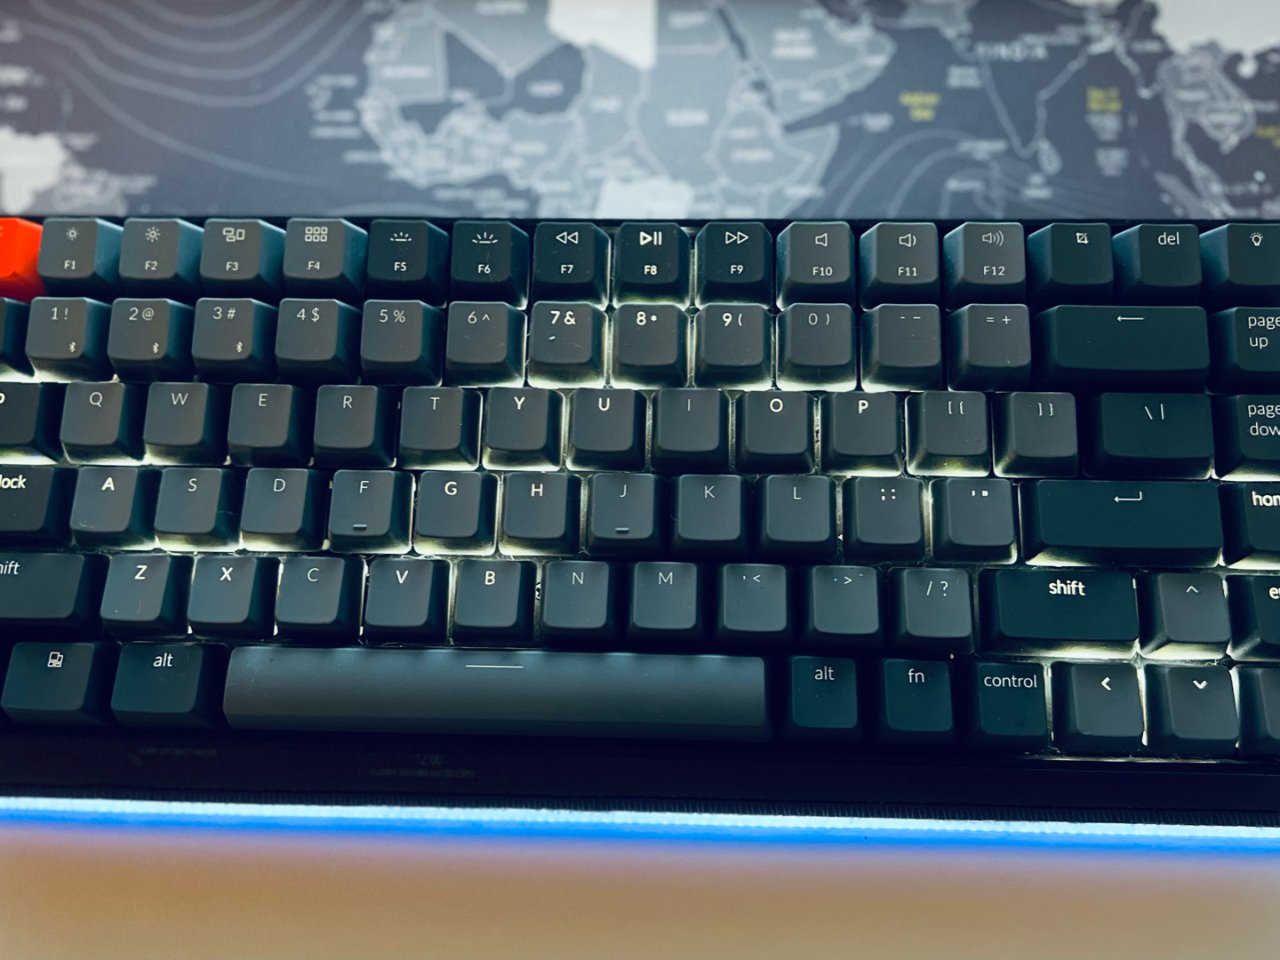 【在家办公】Amazon LED机械键盘...